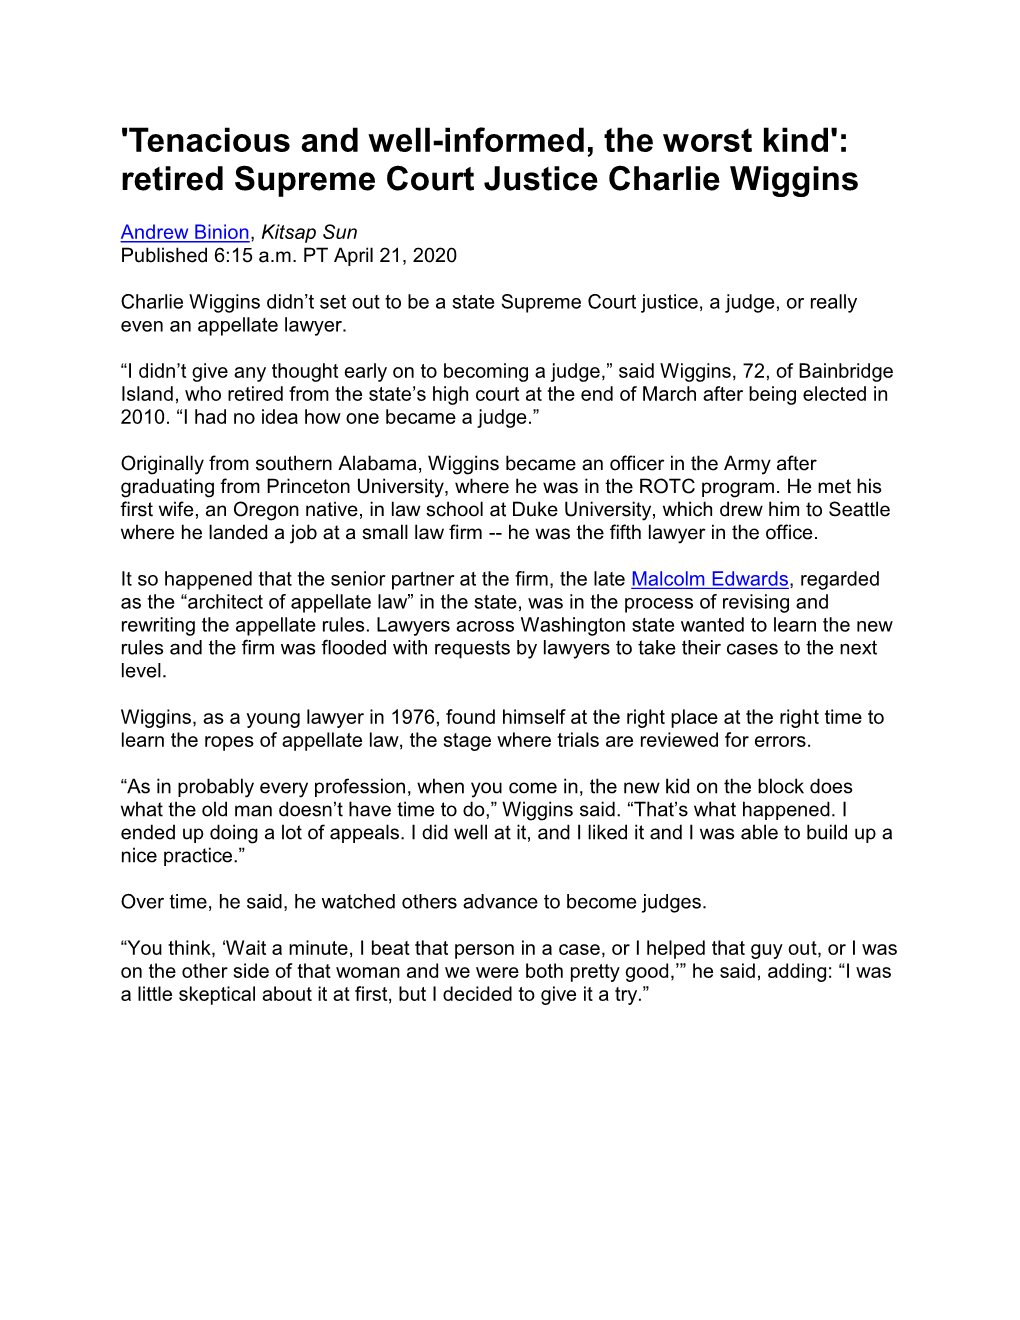 Retired Supreme Court Justice Charlie Wiggins